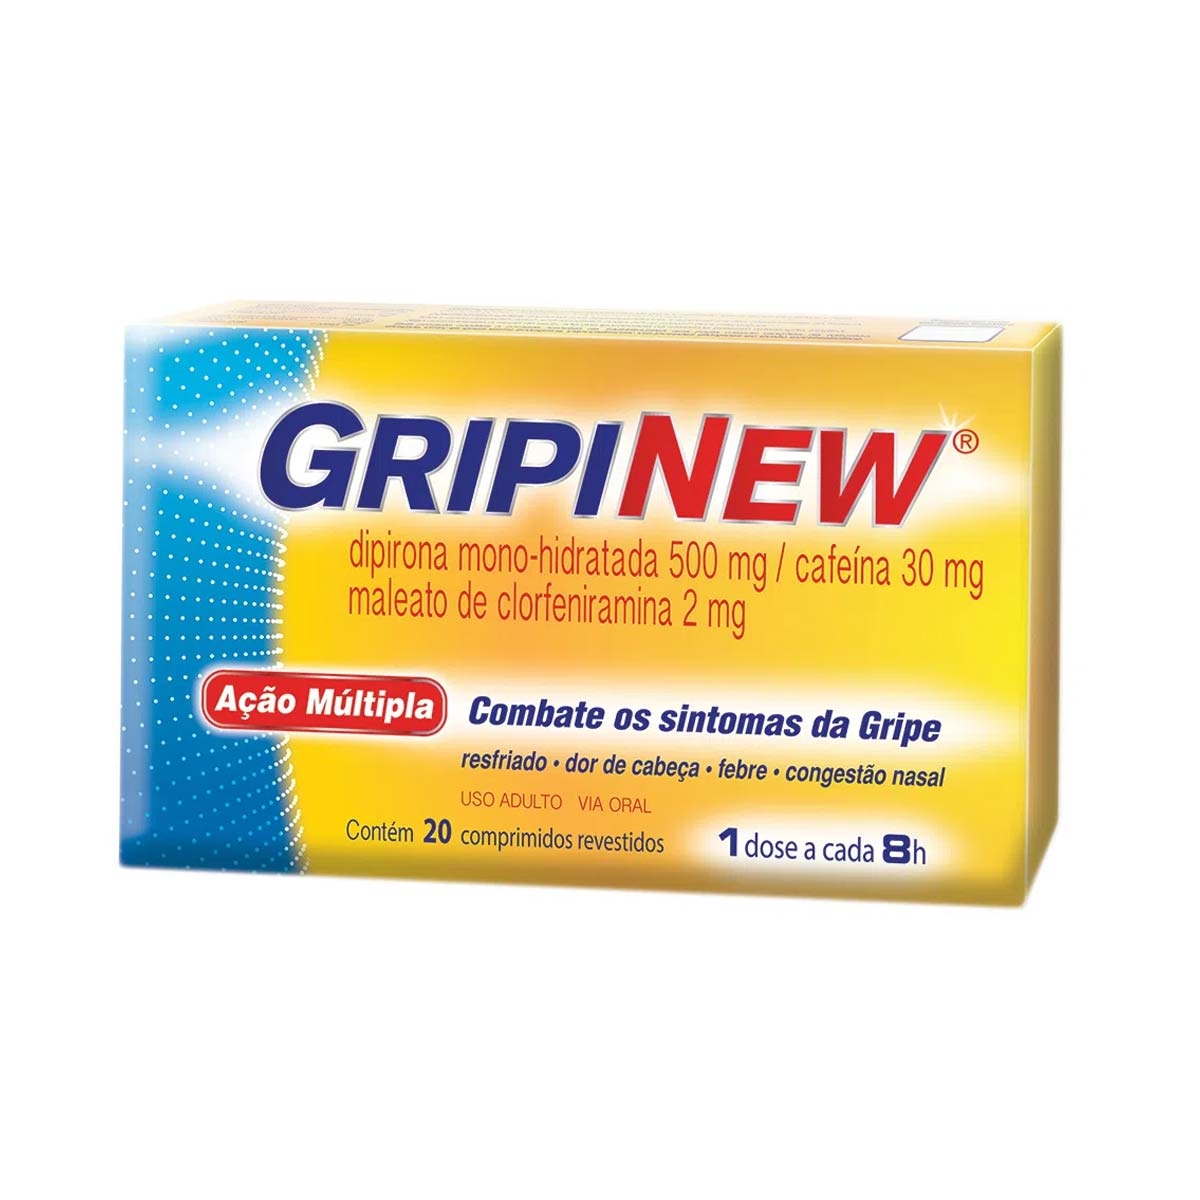 Gripinew Dipirona Monoidratada 500mg + Maleato de Clorfeniramina 2mg + Cafeína 30mg 20 comprimidos